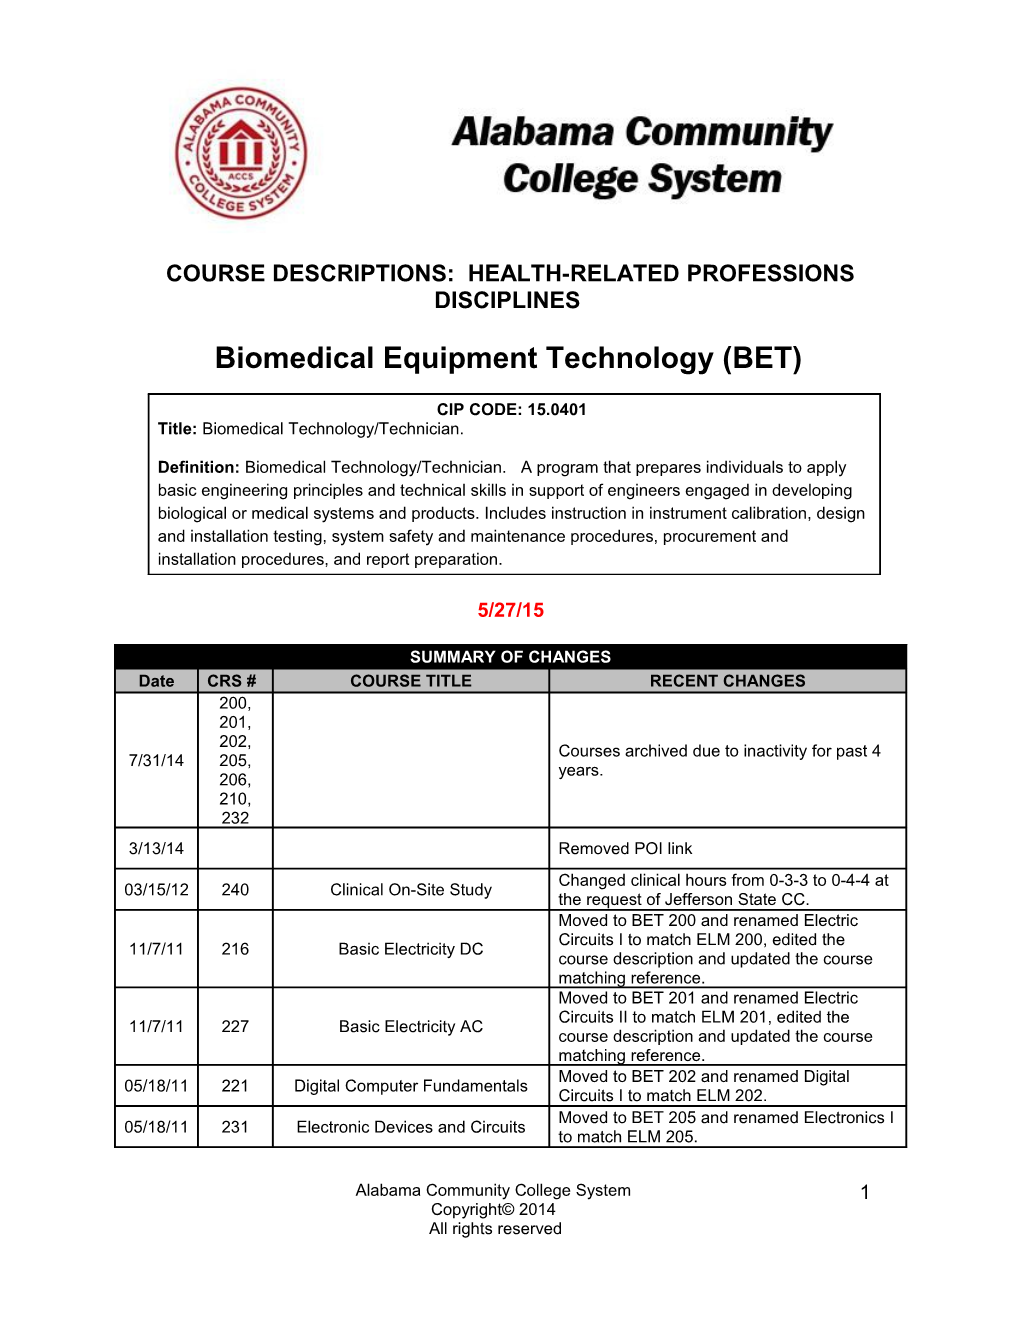 Biomedical Equipment Technology